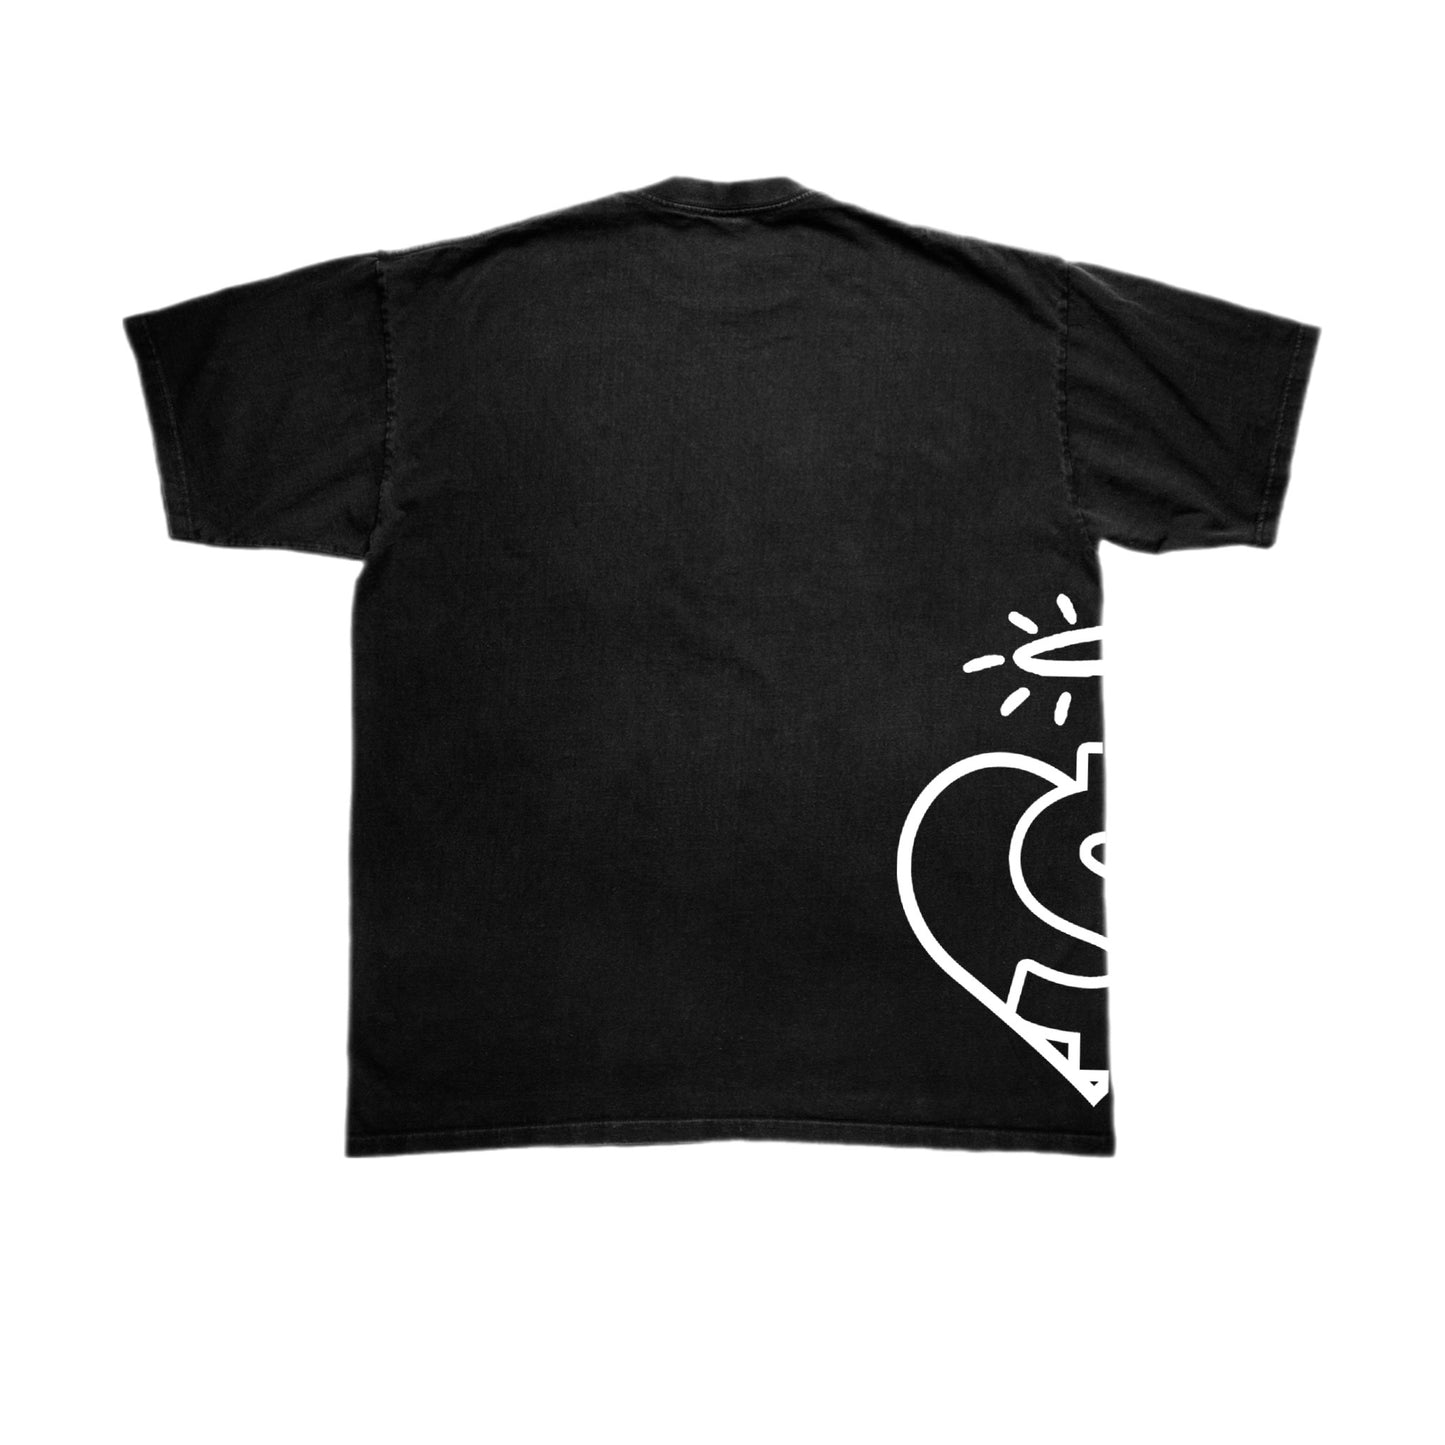 Evol Side Logo Shirt Black/White